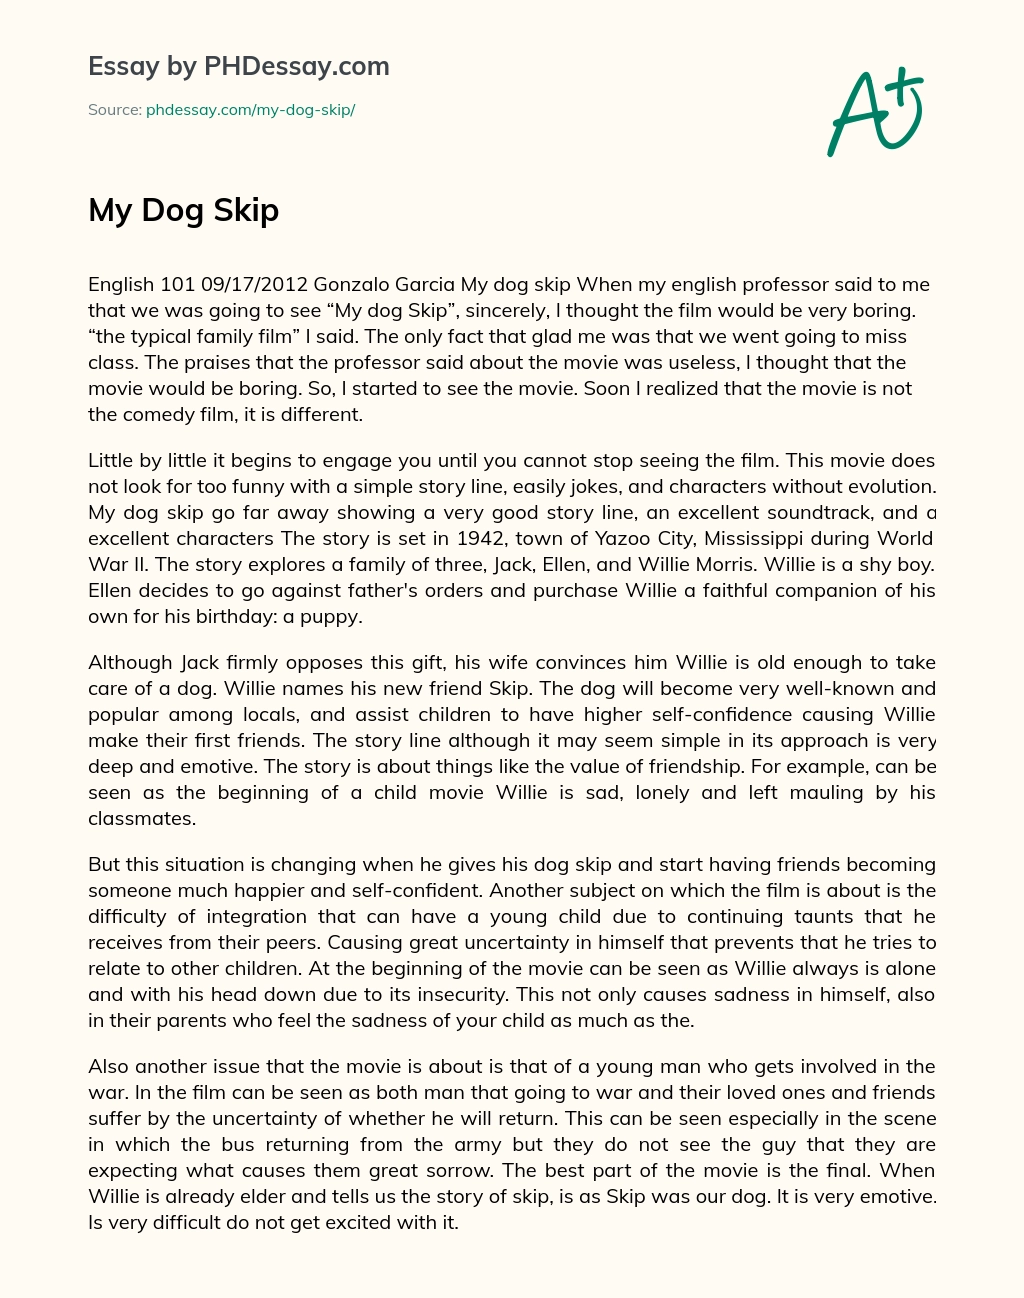 My Dog Skip essay